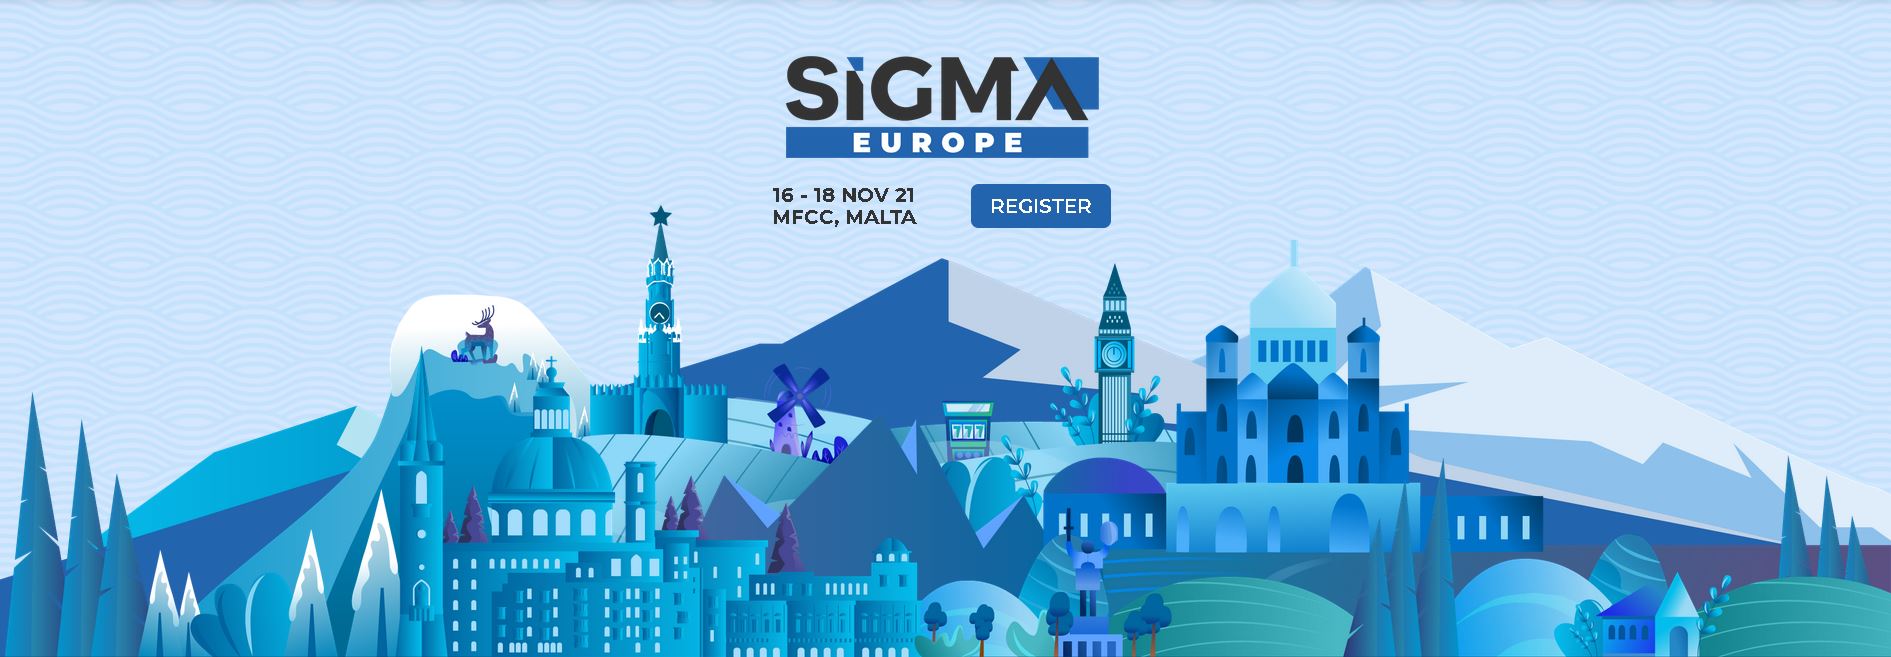 SIGMA EUROPE organized by SiGMA Group